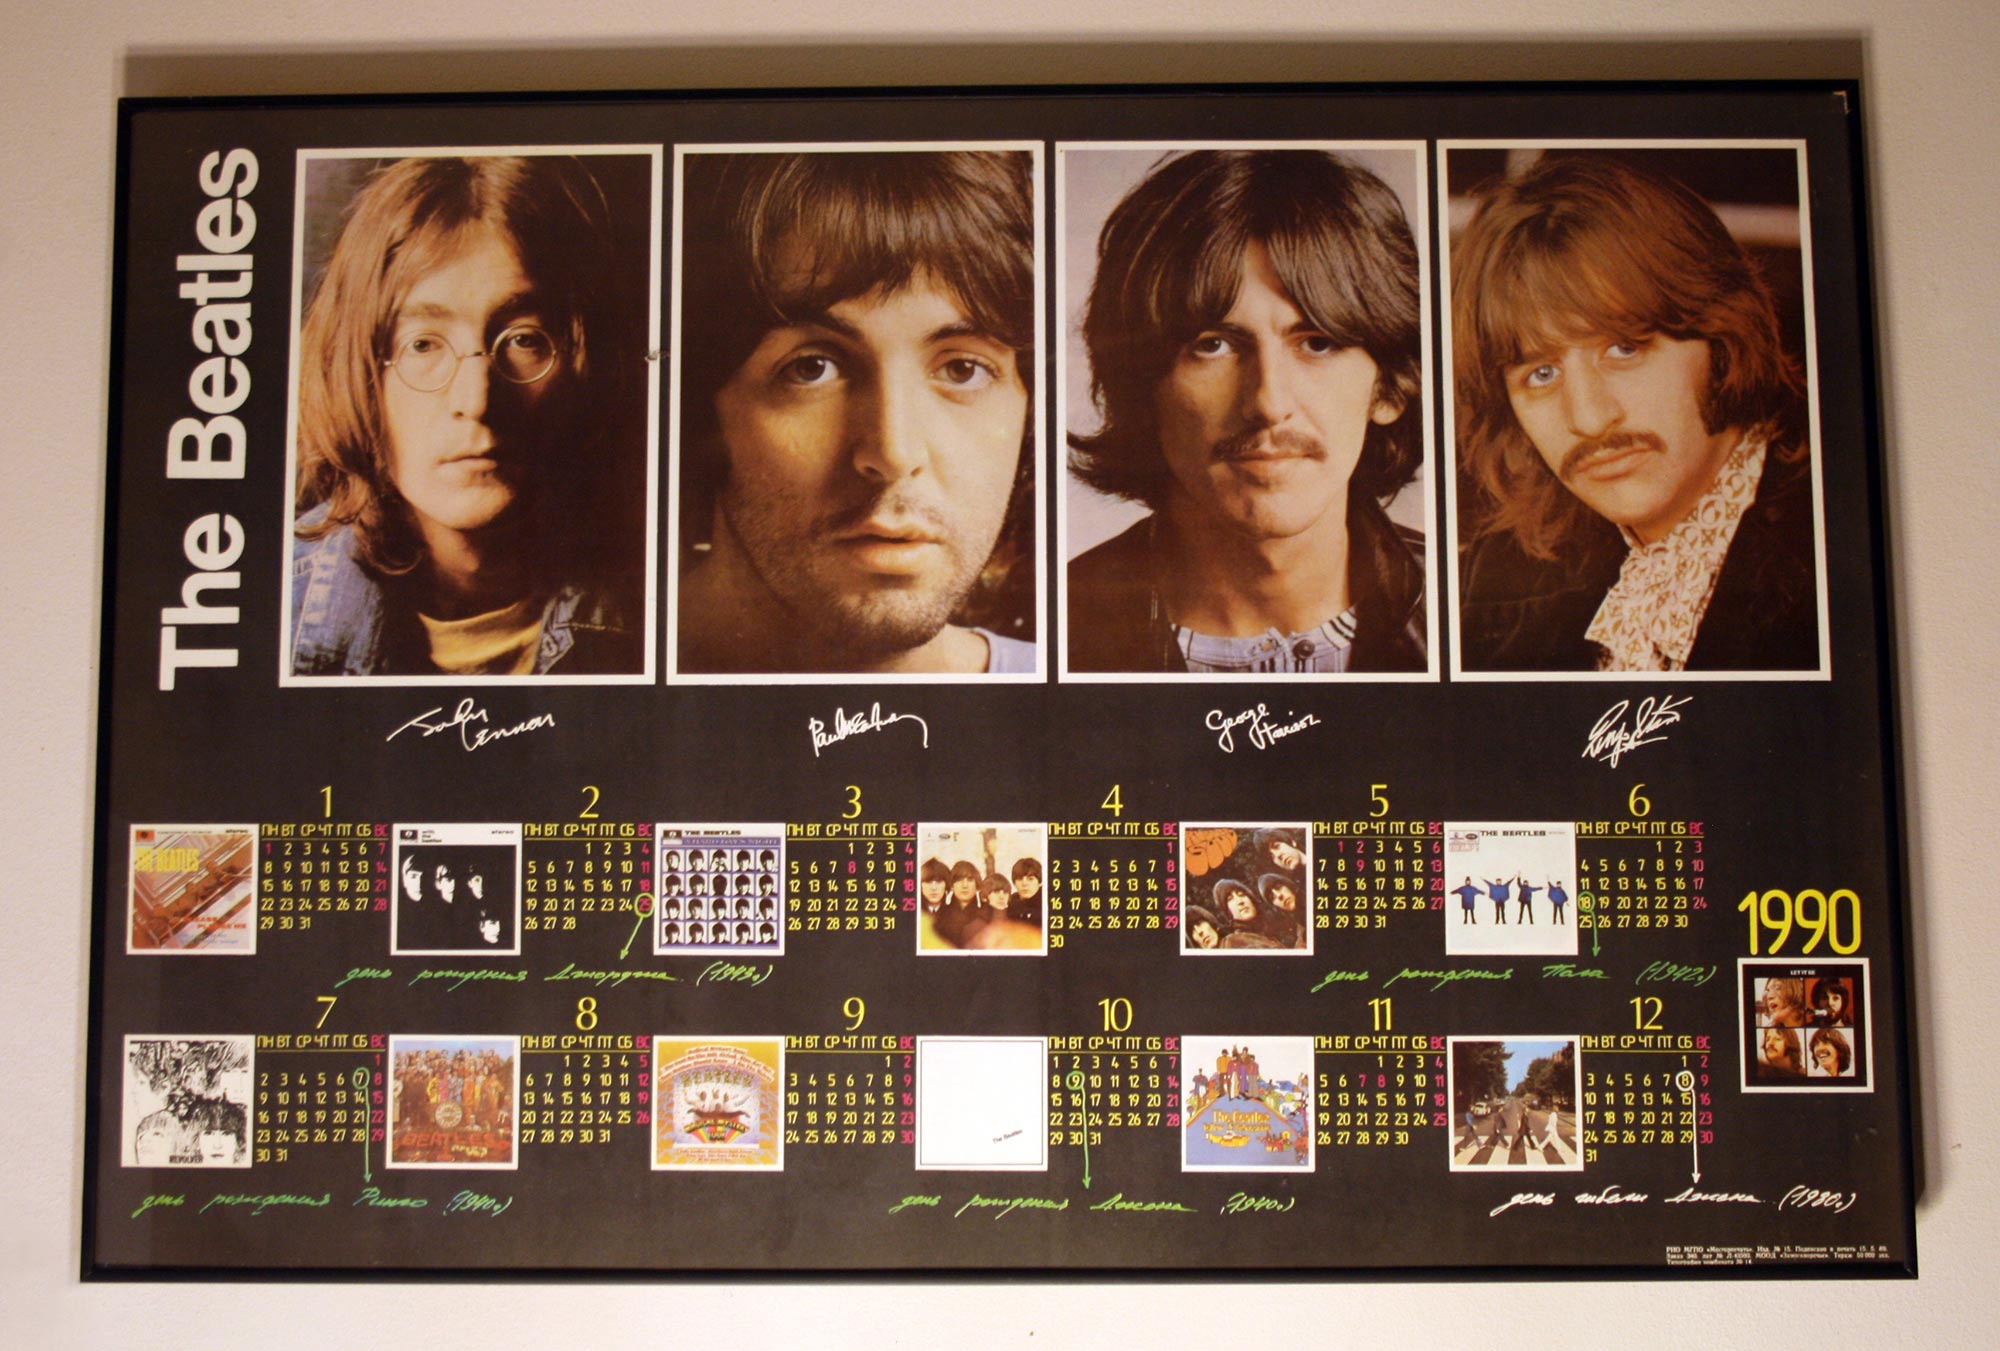 USSR Beatles poster